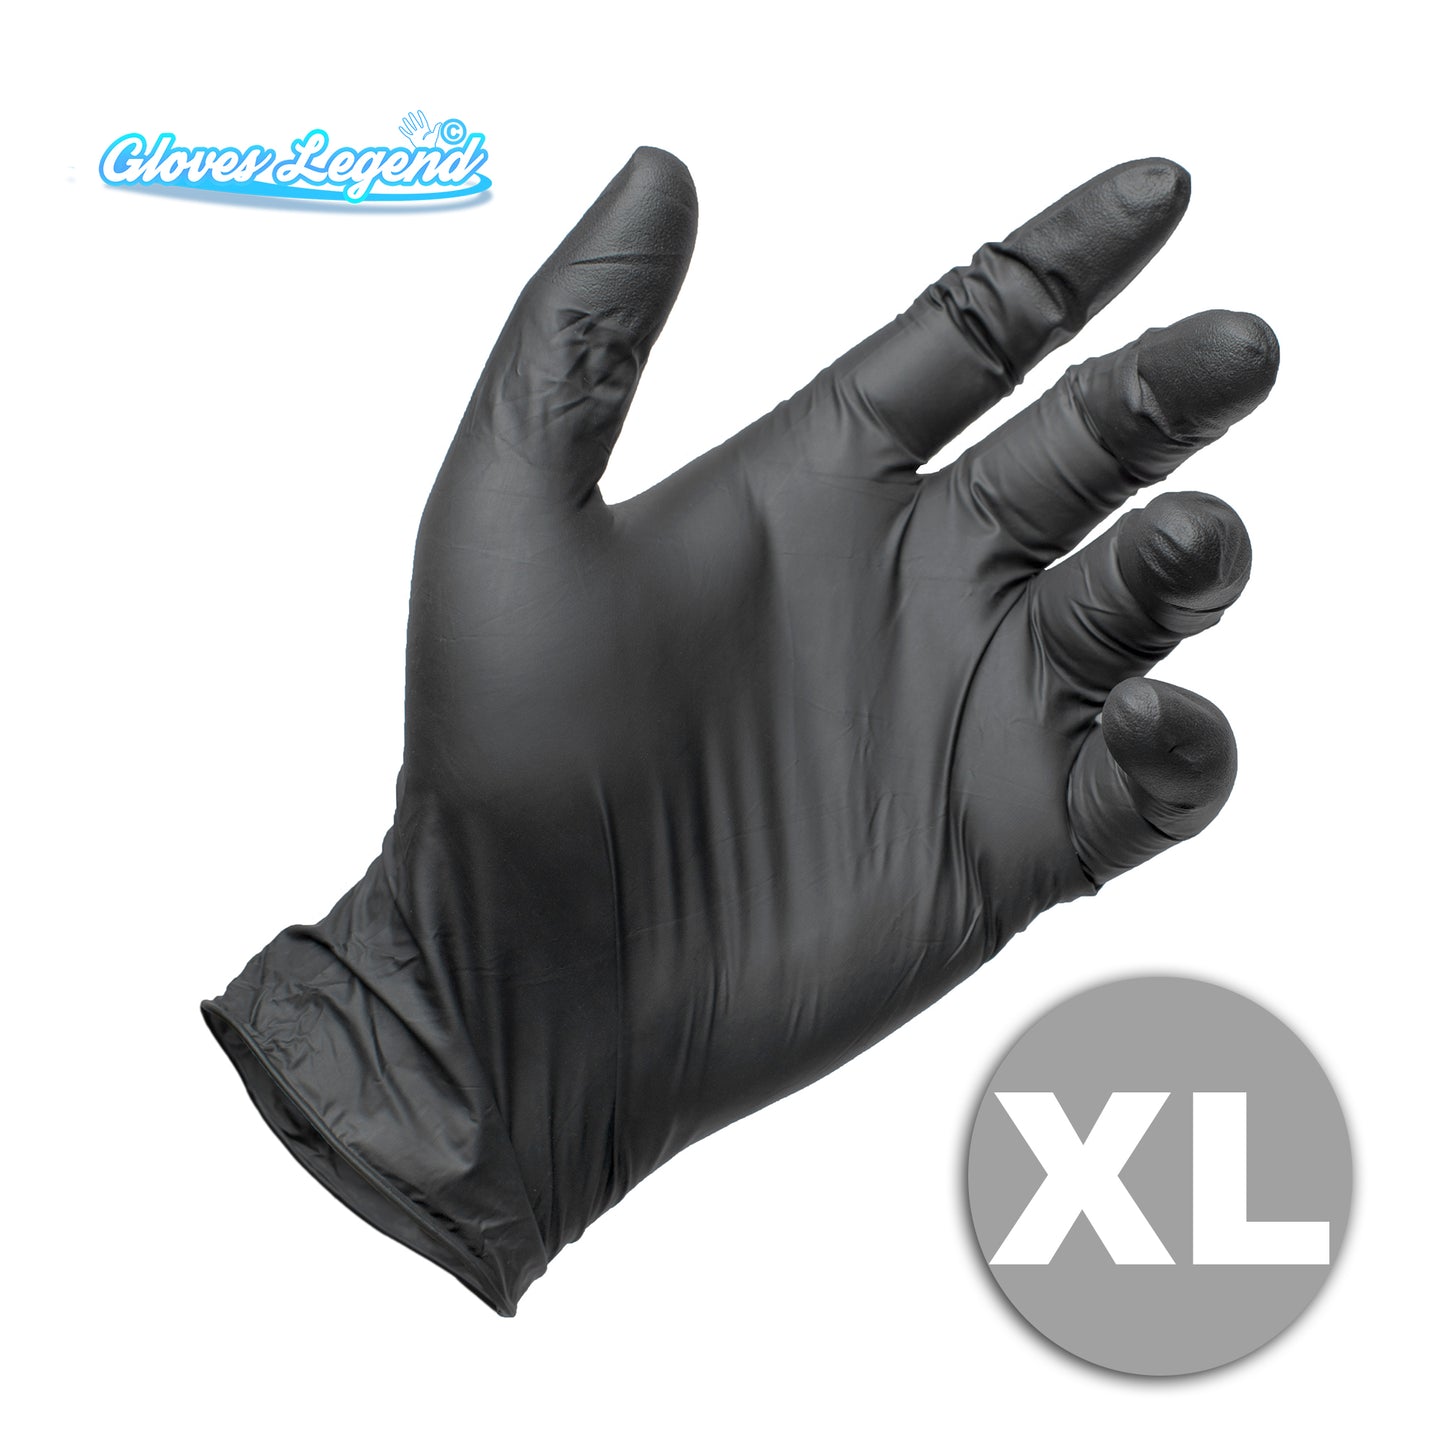 10 Boxes (900 Gloves) - Size Extra Large - Black Nitrile Powder Free Medical Exam Tattoos Piercing Gloves